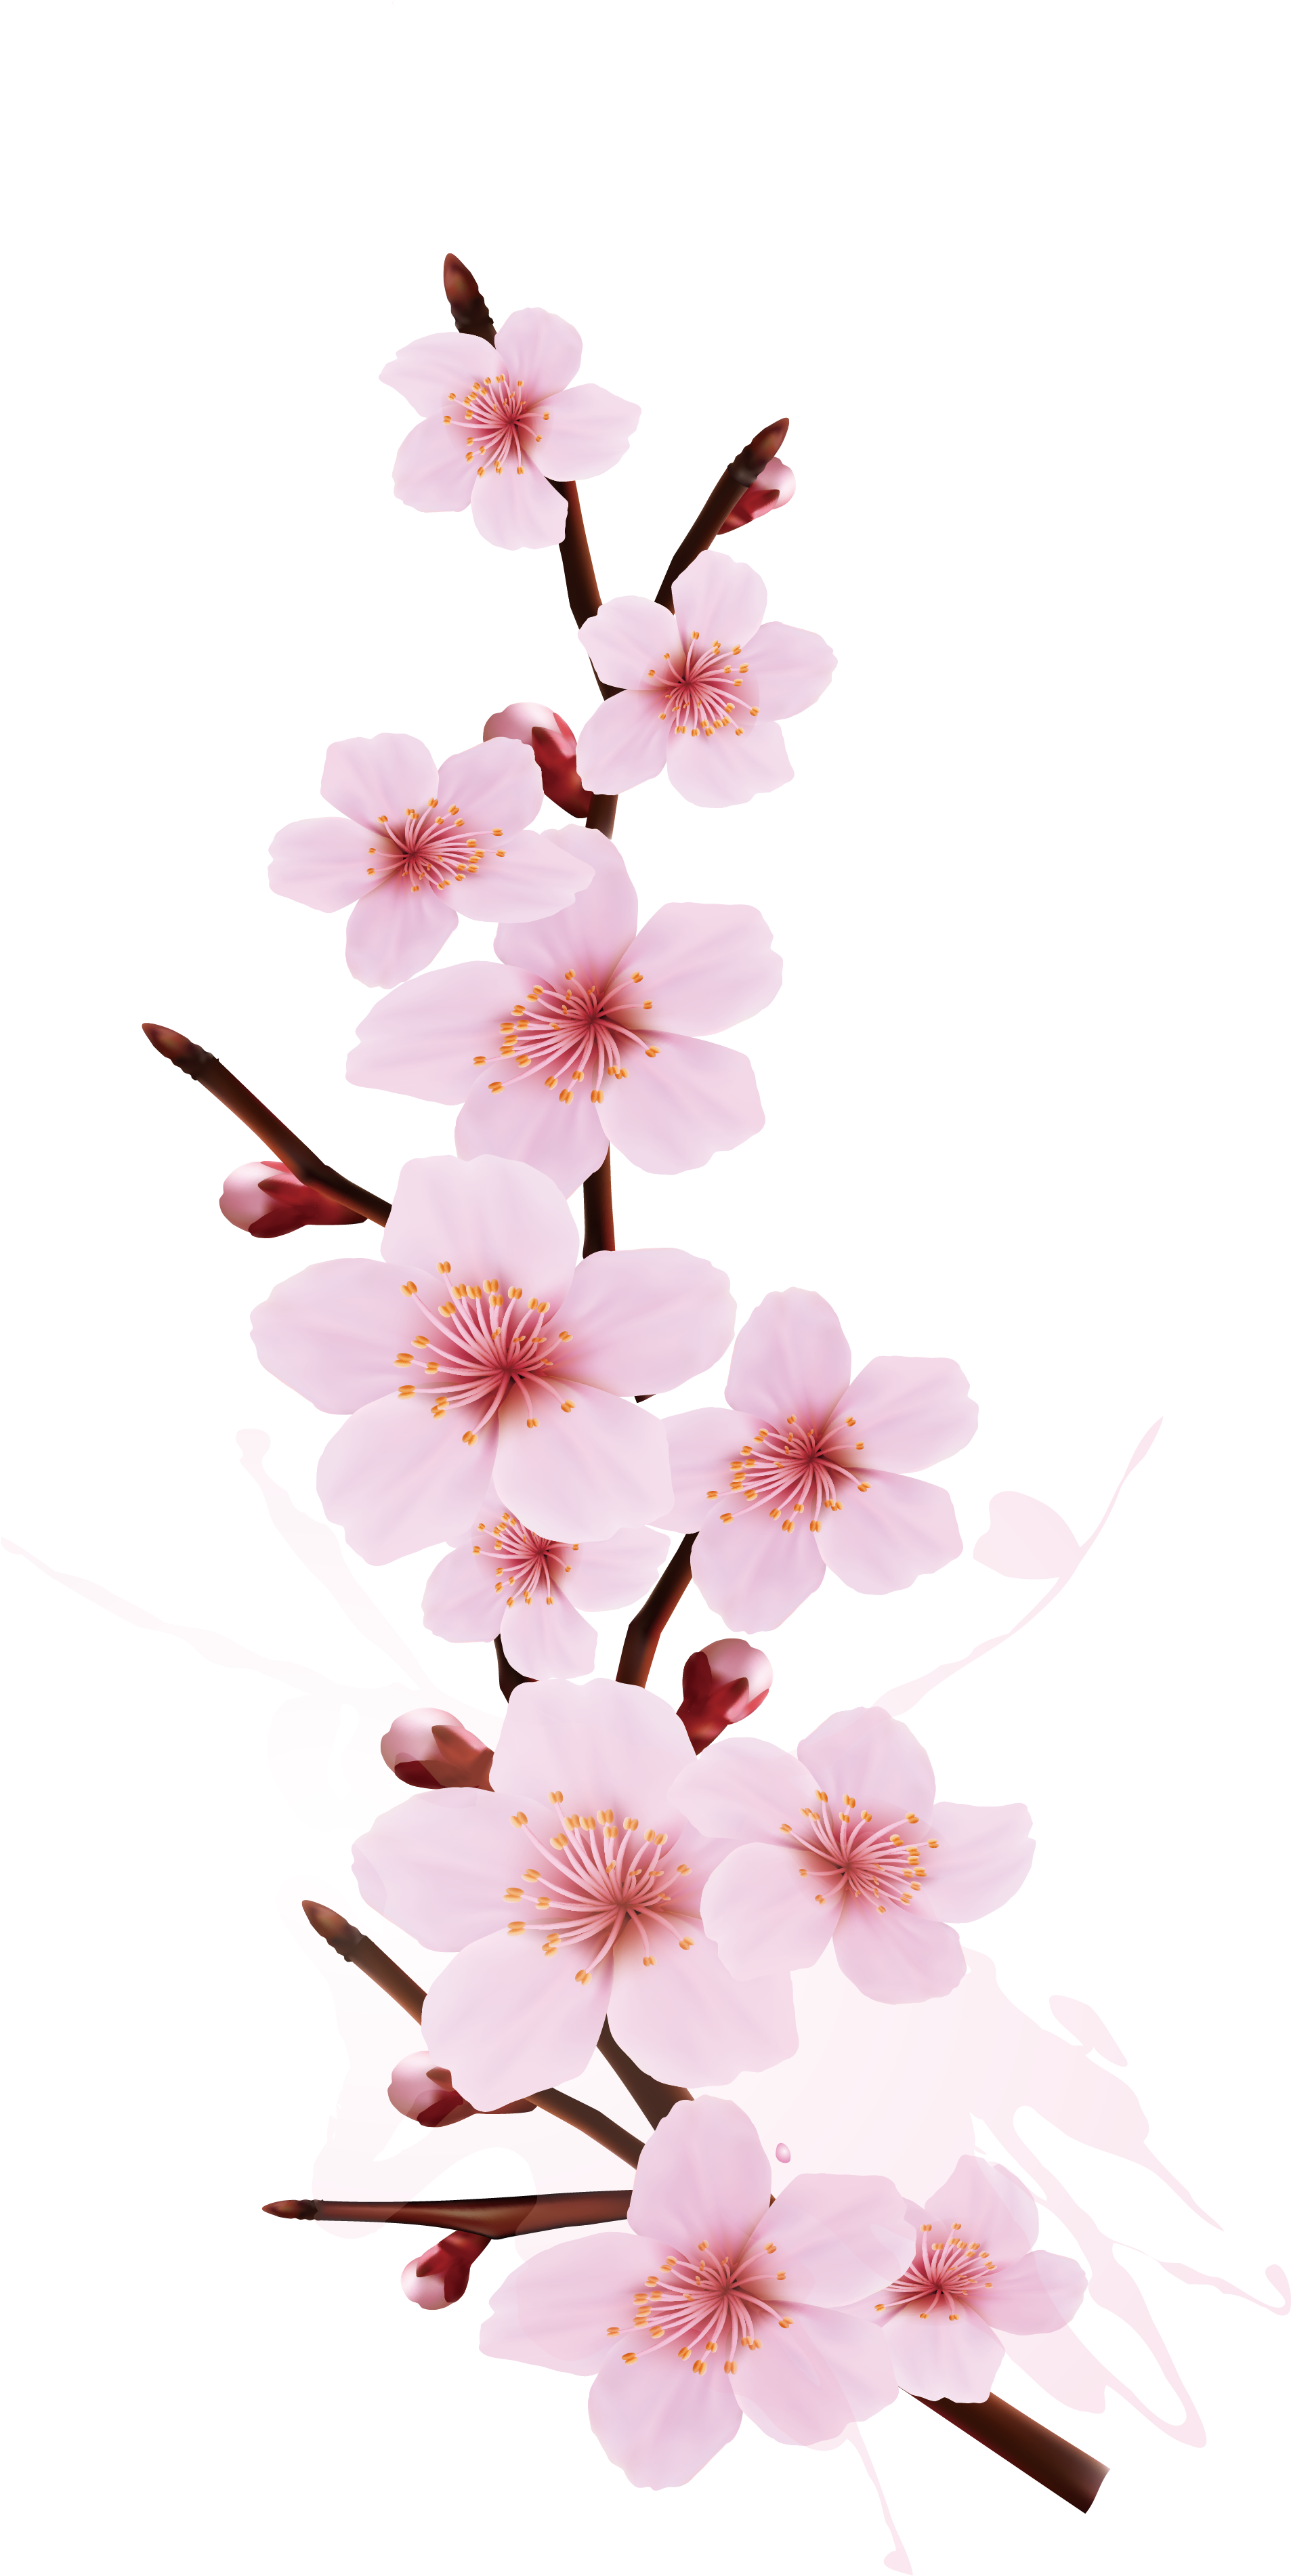 Fond de fleur de cerisier Transparent